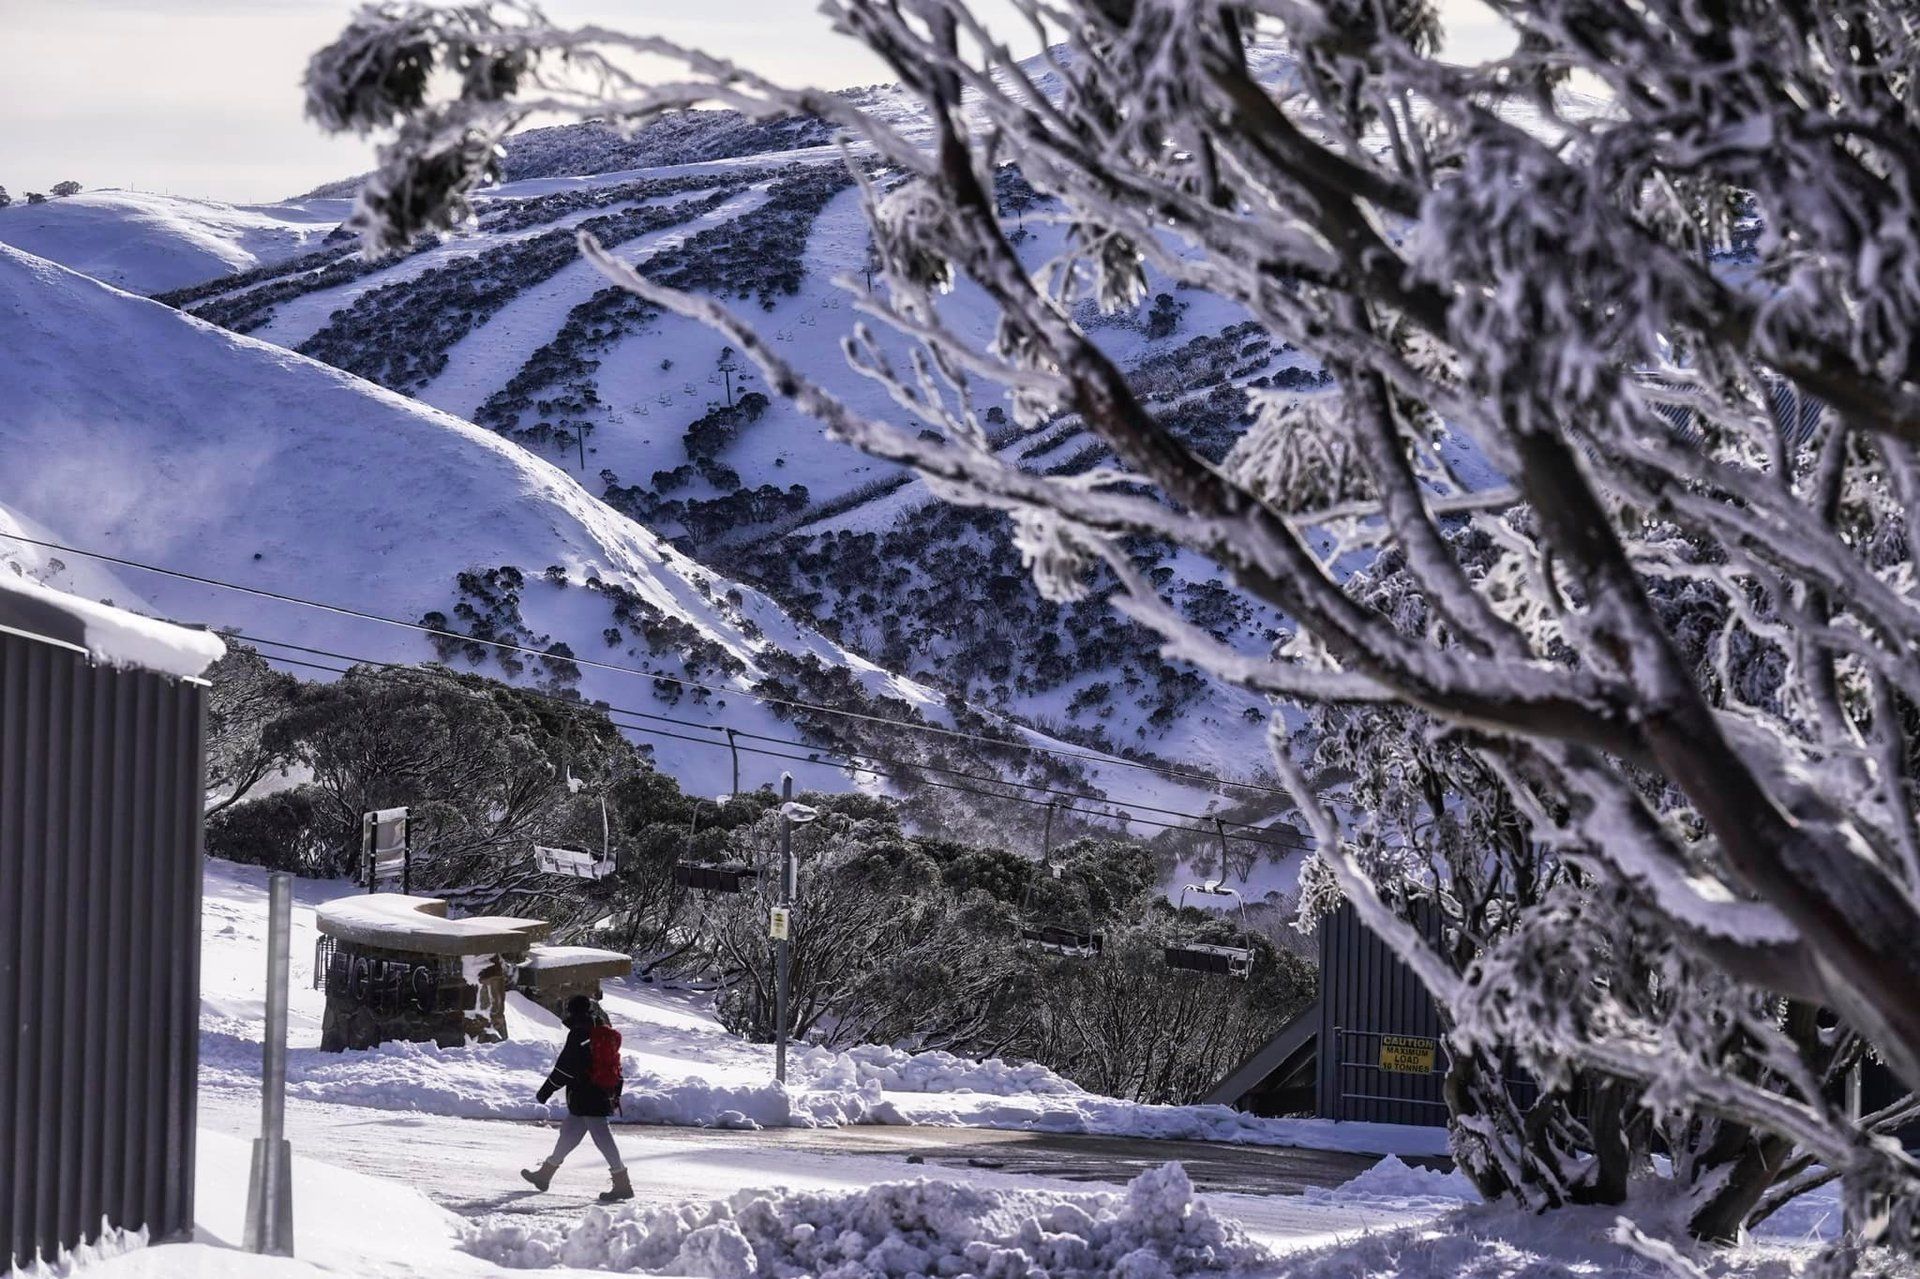 Nevada de junio 2022 en Mt. hotham Ski (Australia)